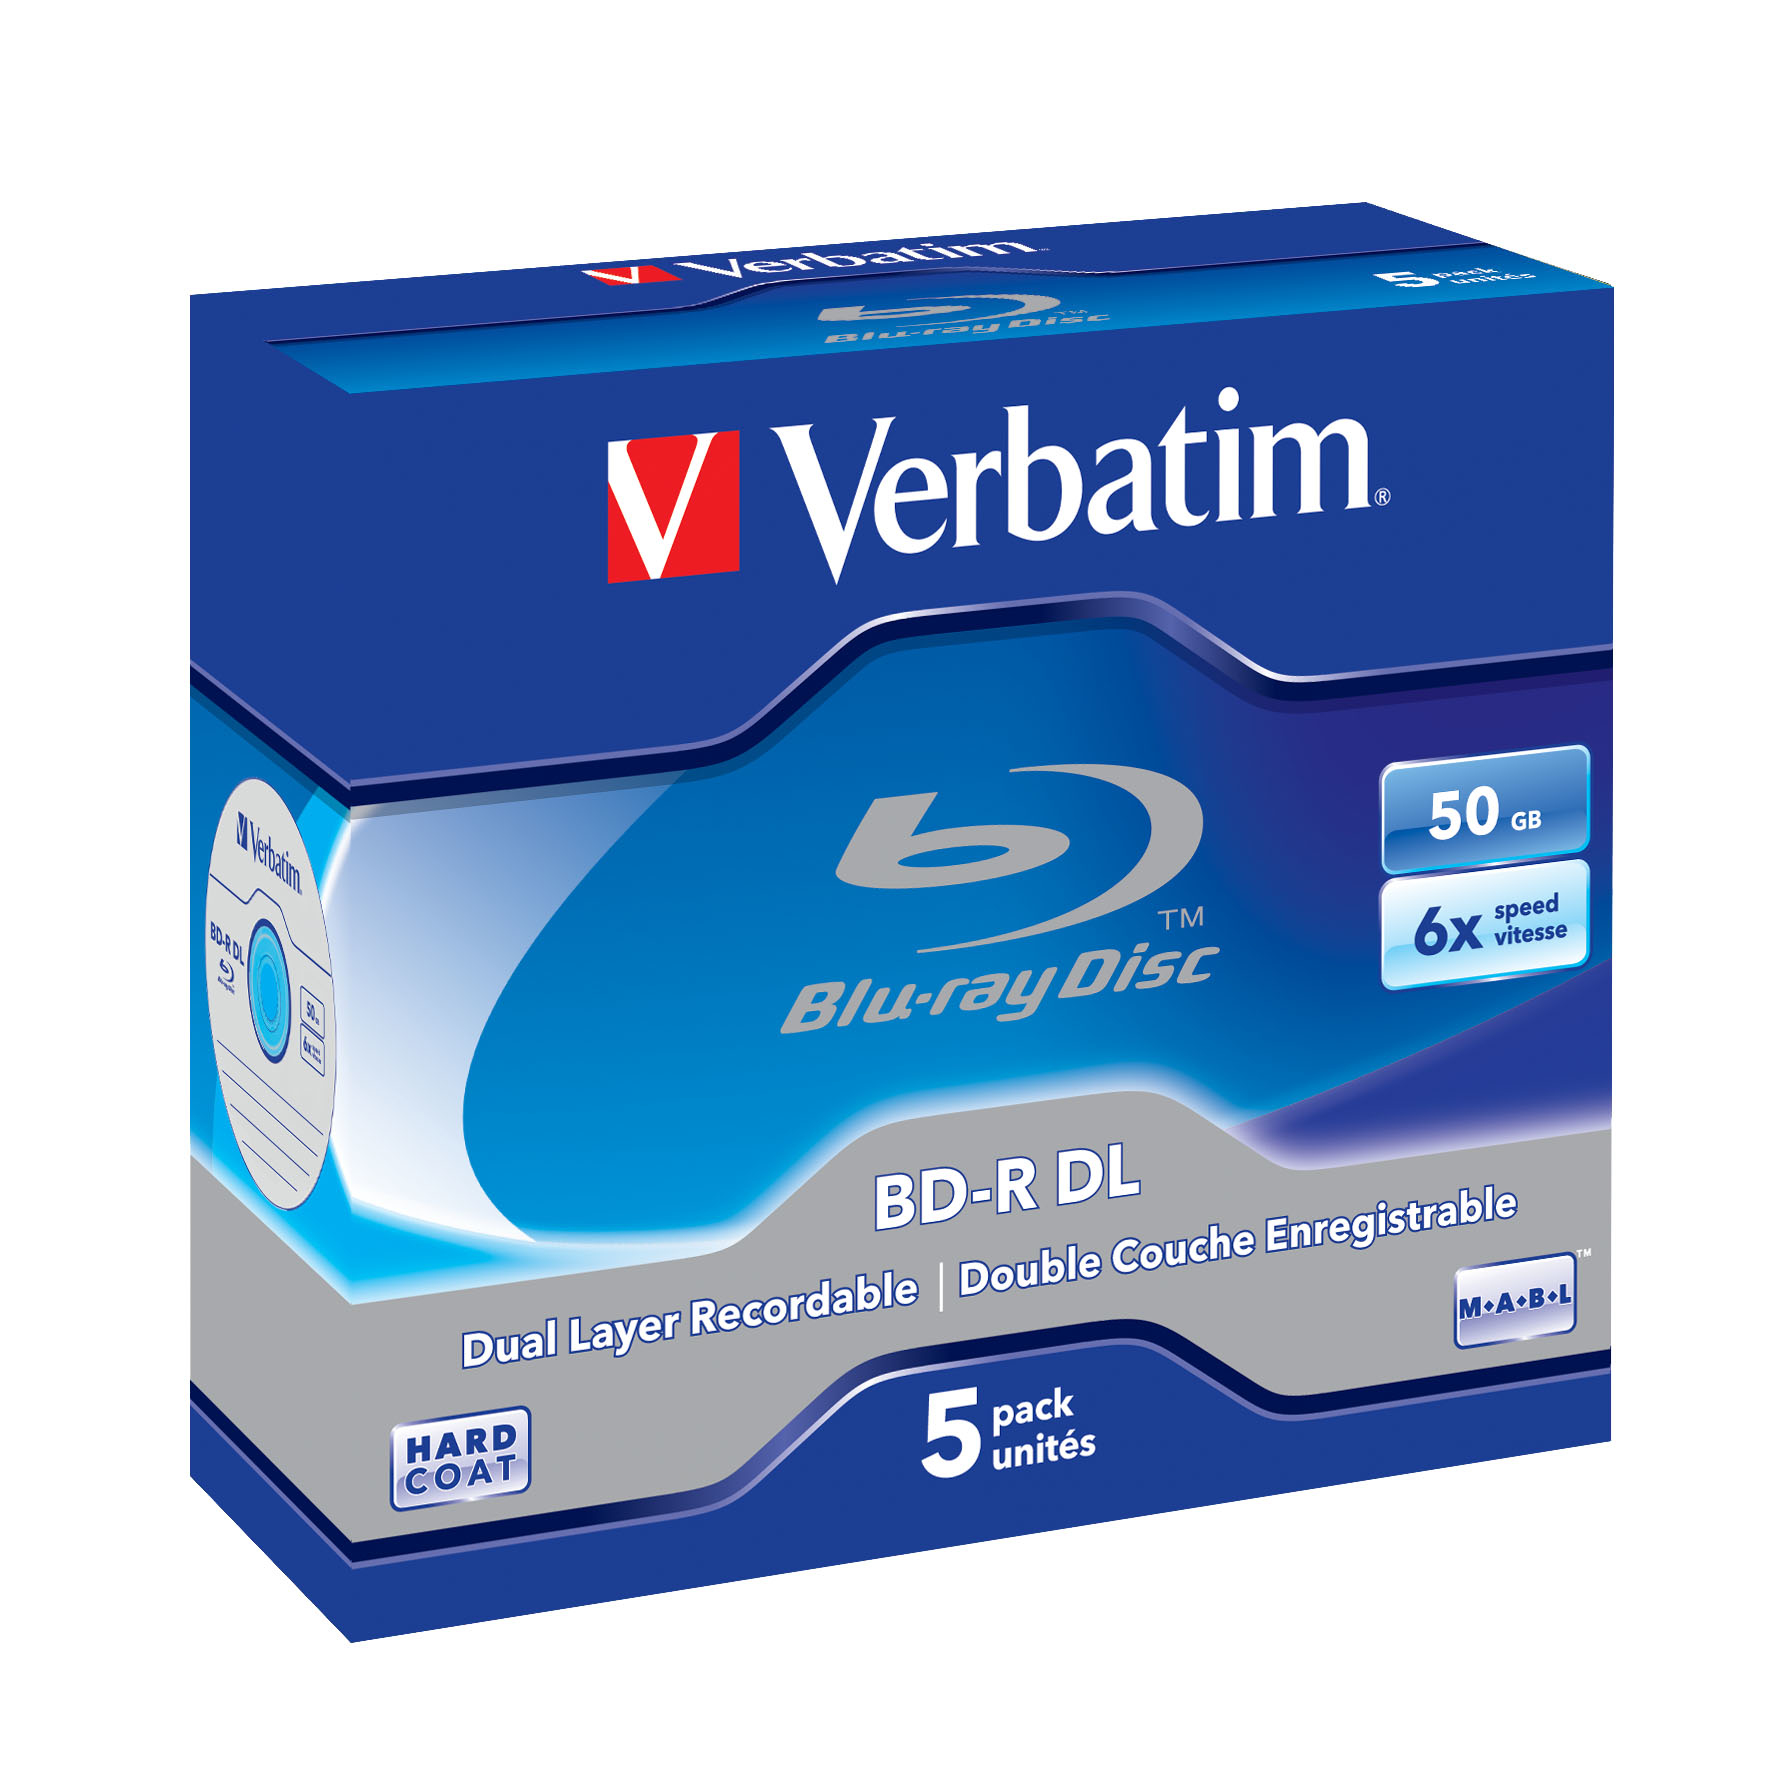 Verbatim BD-R DL 50GB 6x 5pk JC 43748 - CMS01